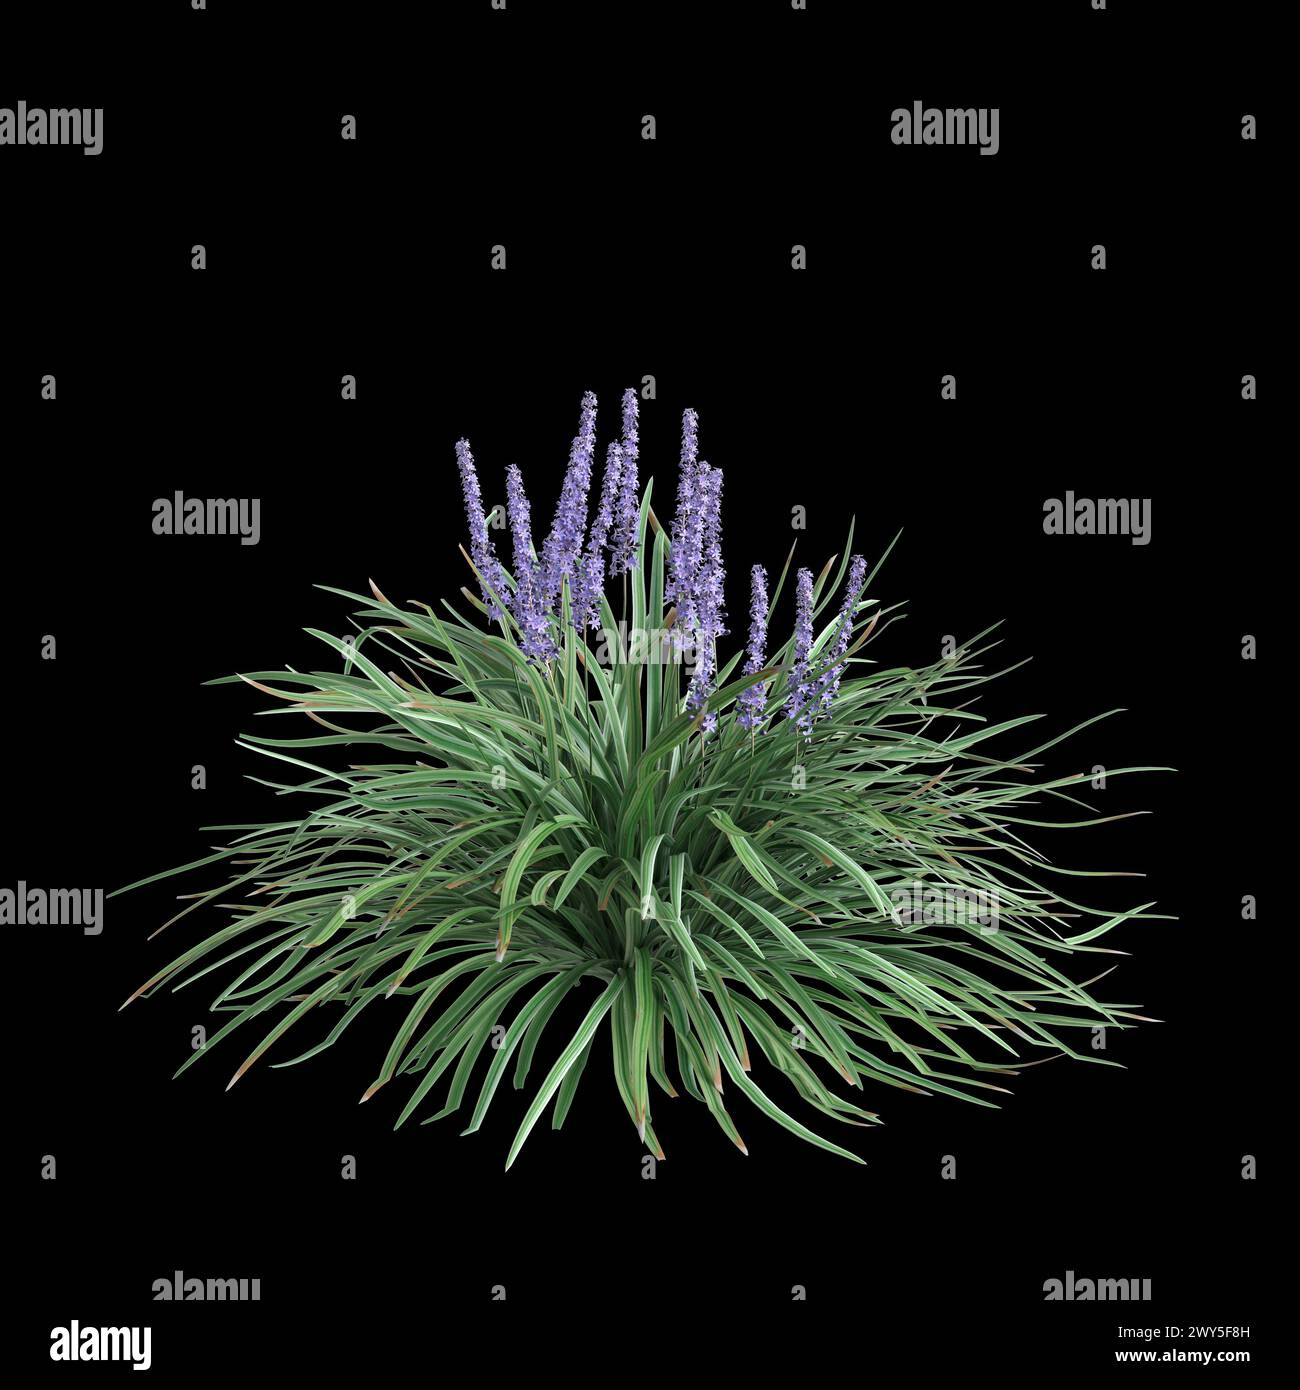 3d illustration of Liriope spicata bush isolated on black background Stock Photo